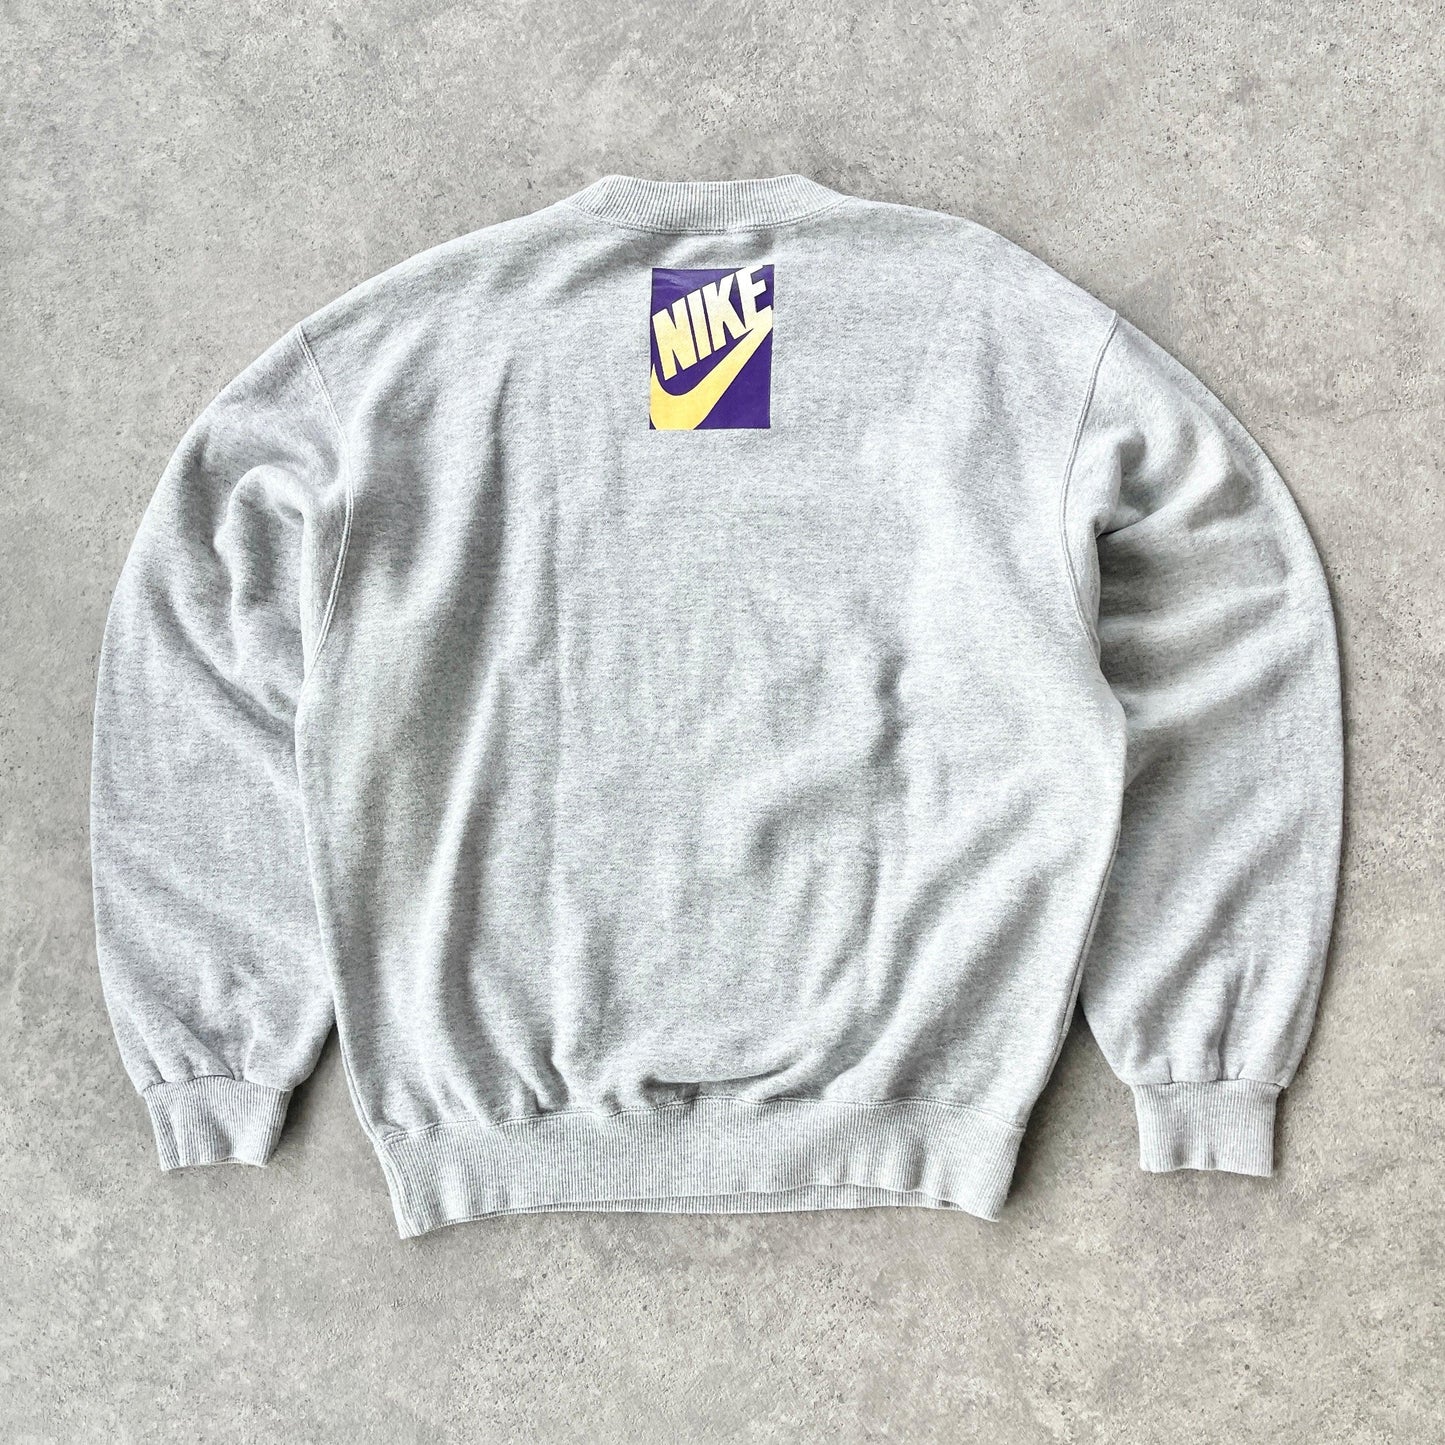 Nike RARE 1990s Air Jordan graphic heavyweight sweatshirt (M) - Known Source